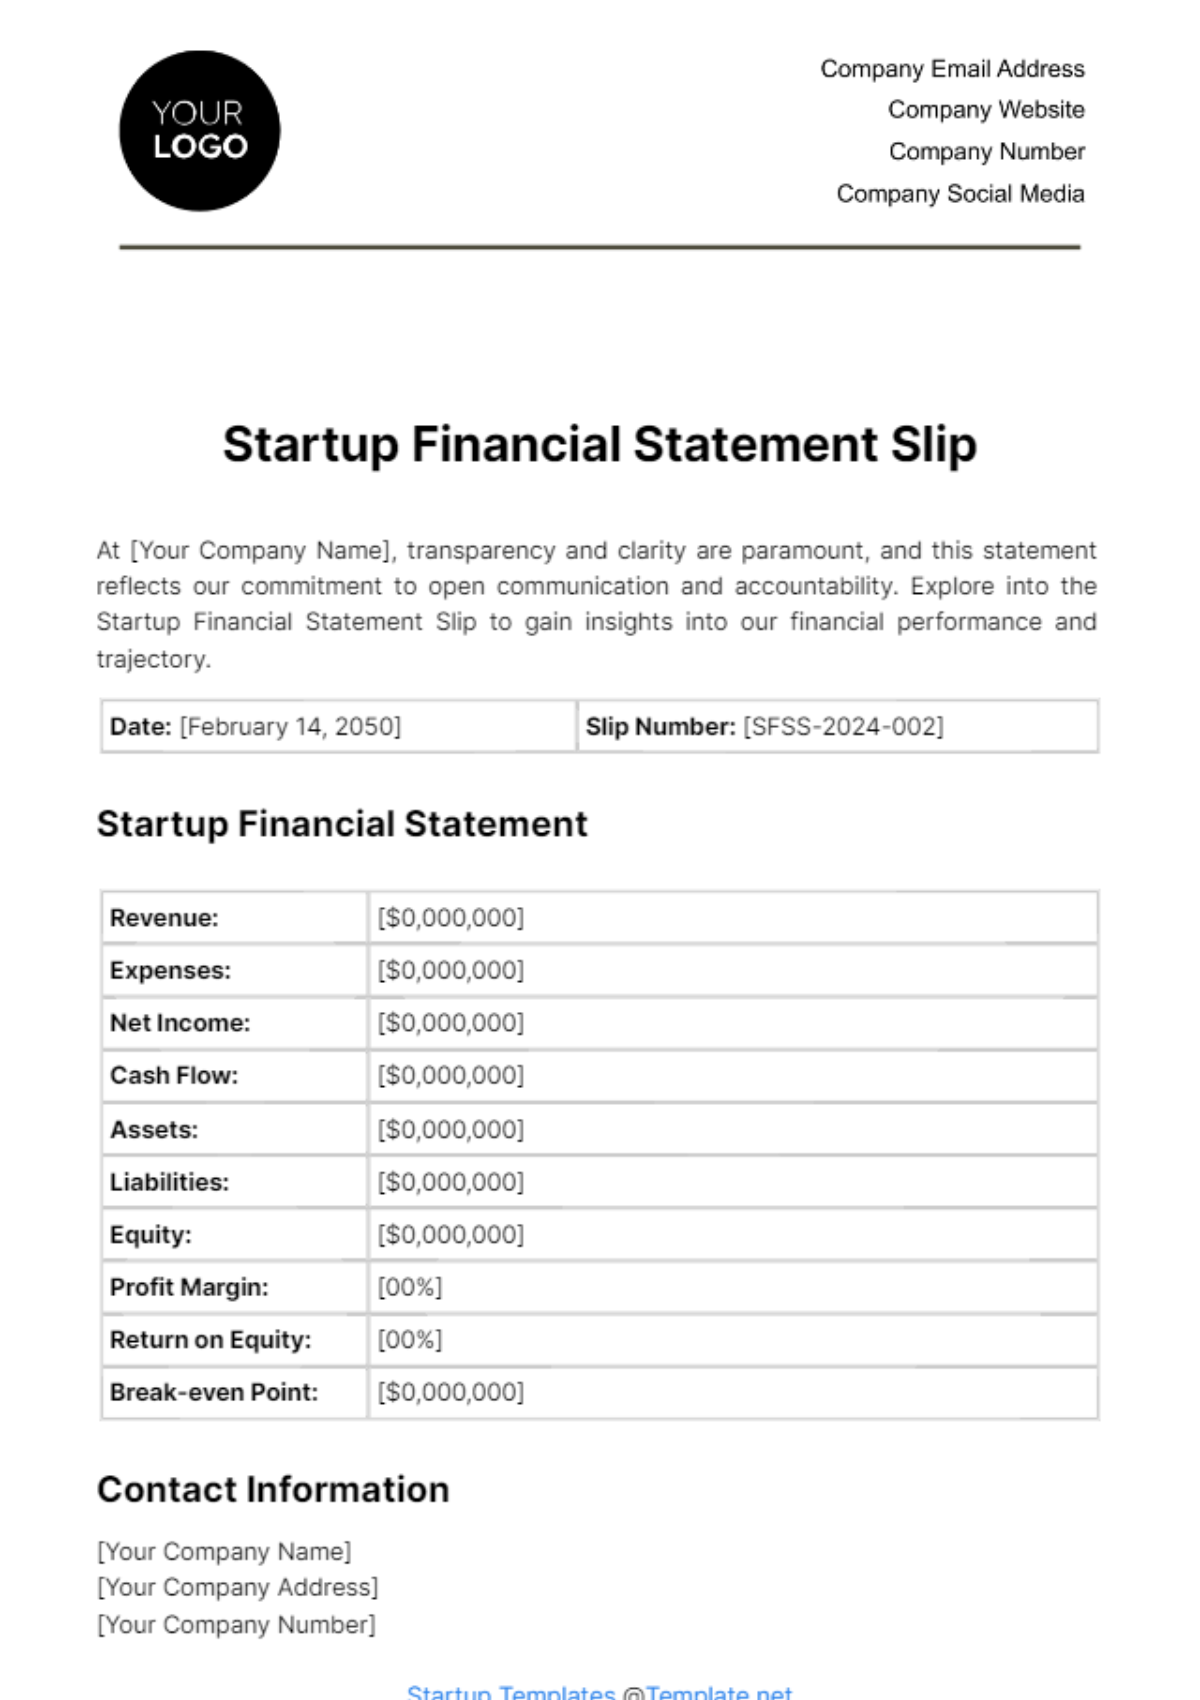 Free Startup Financial Statement Slip Template